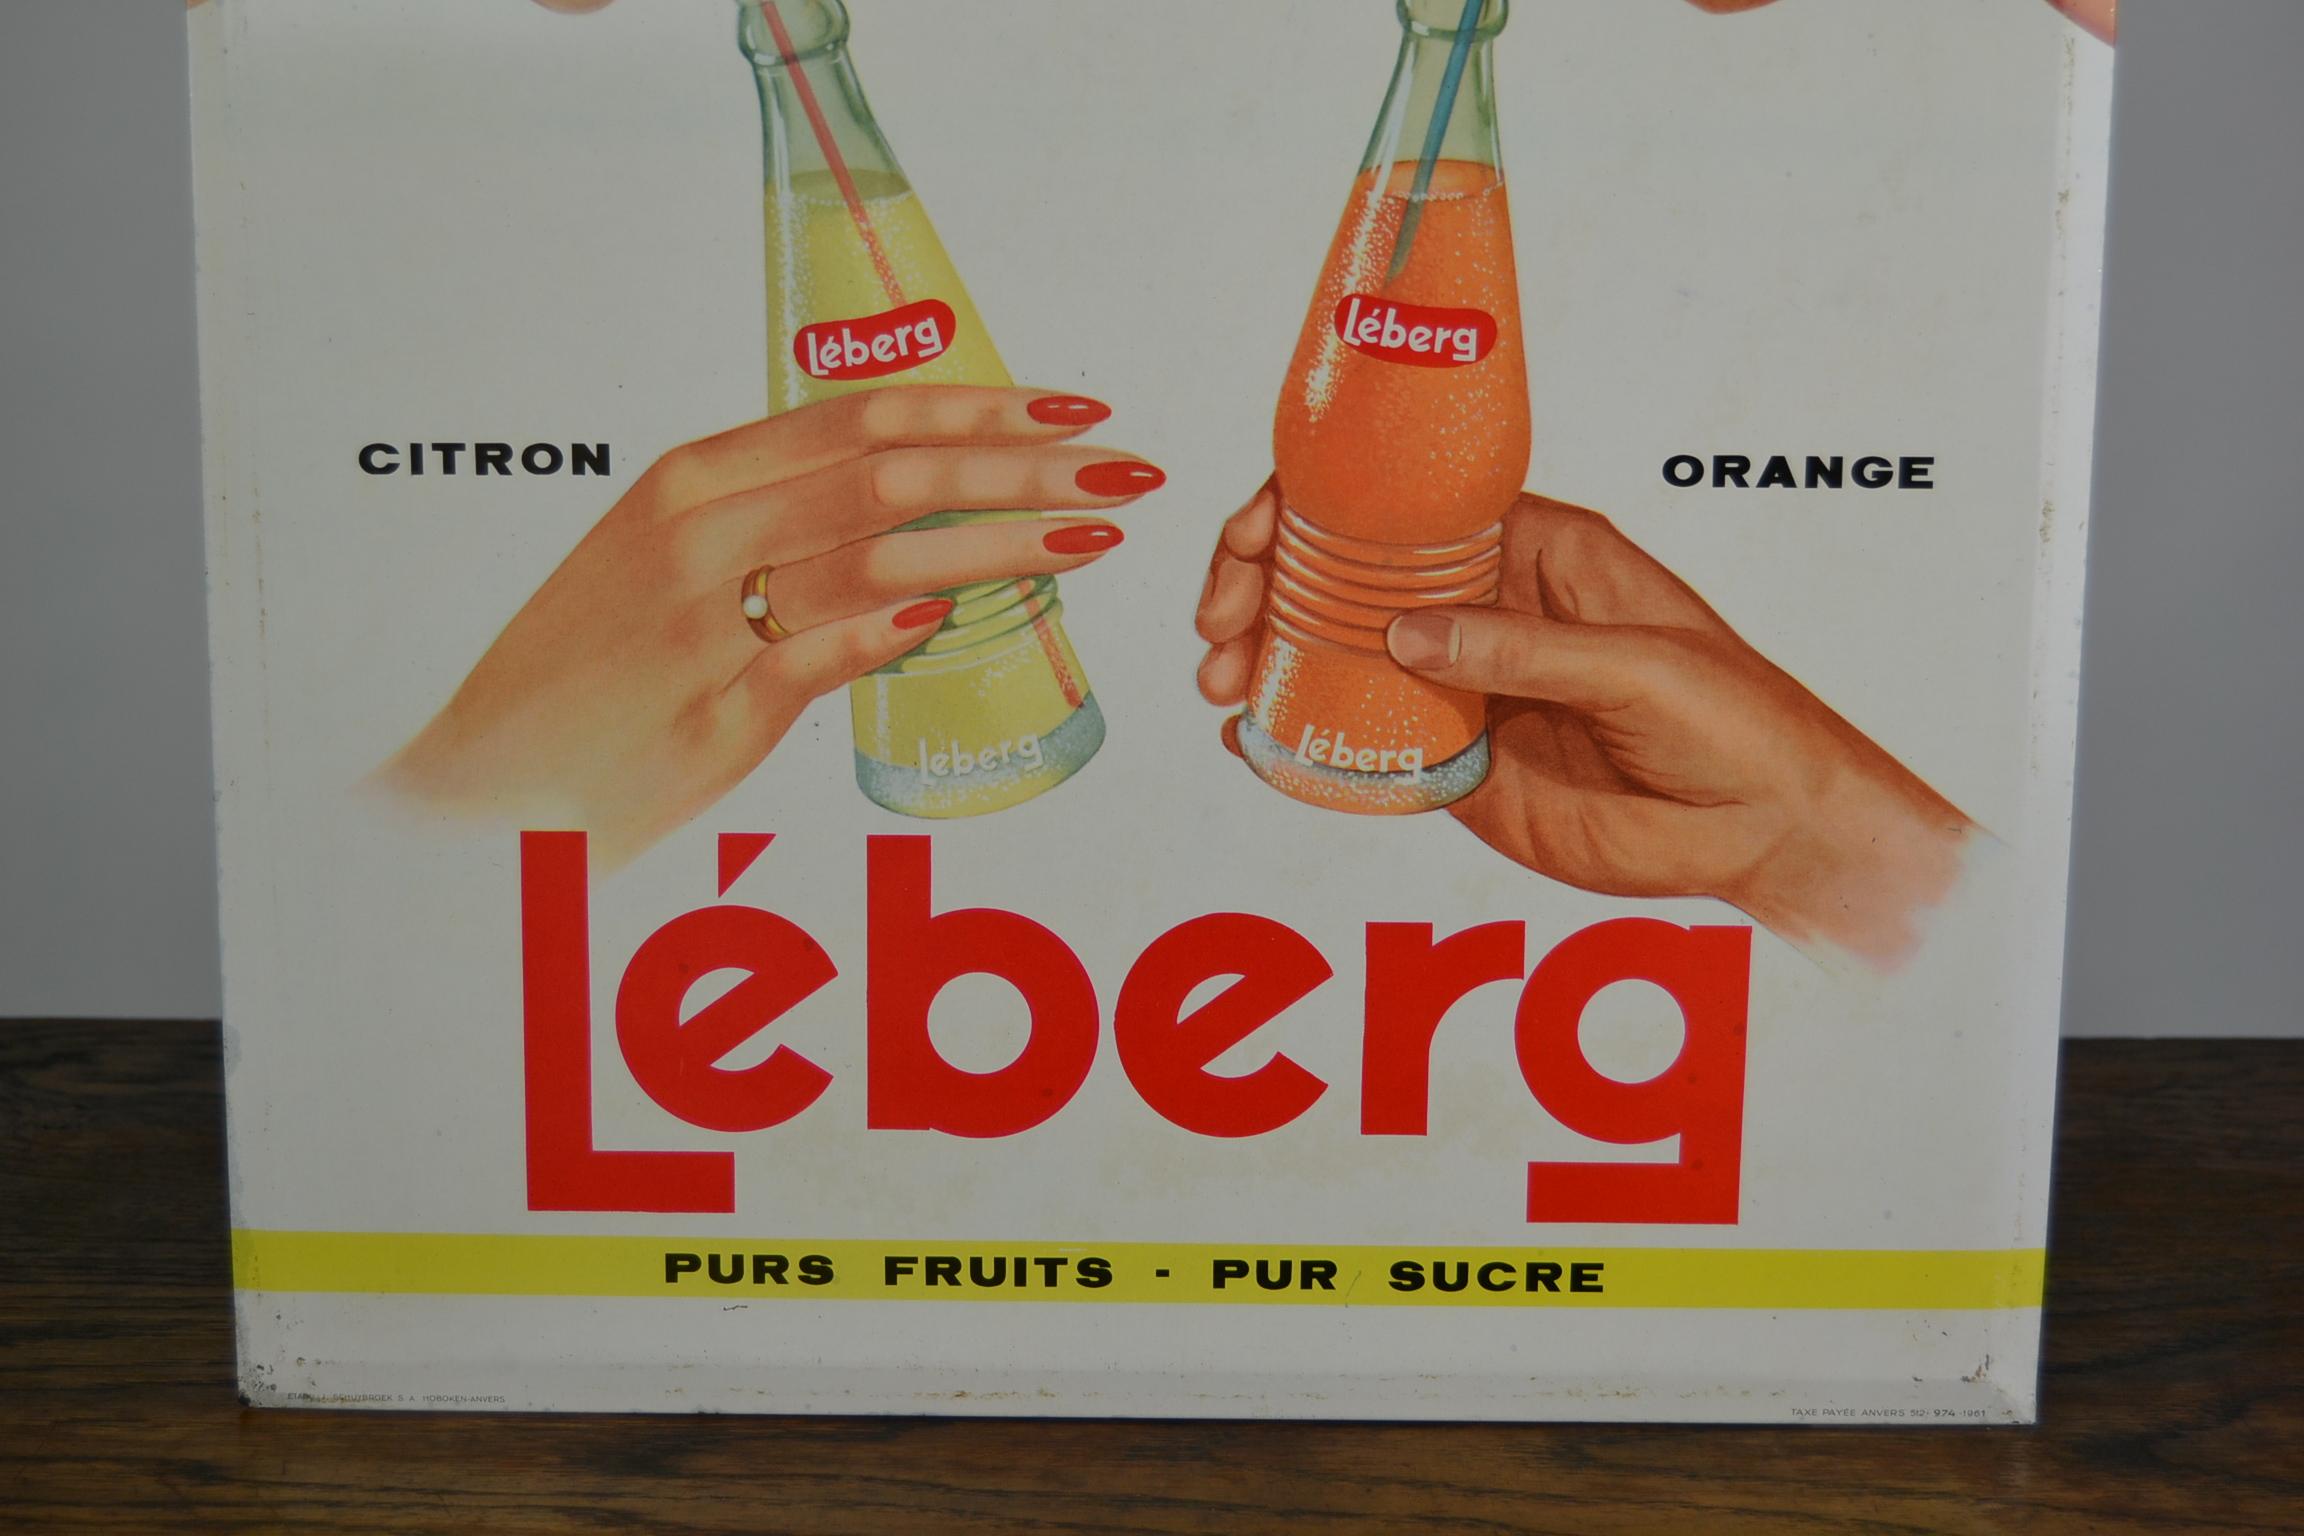 1961 Tin Advertising Sign for Lemonade, Belgium 3